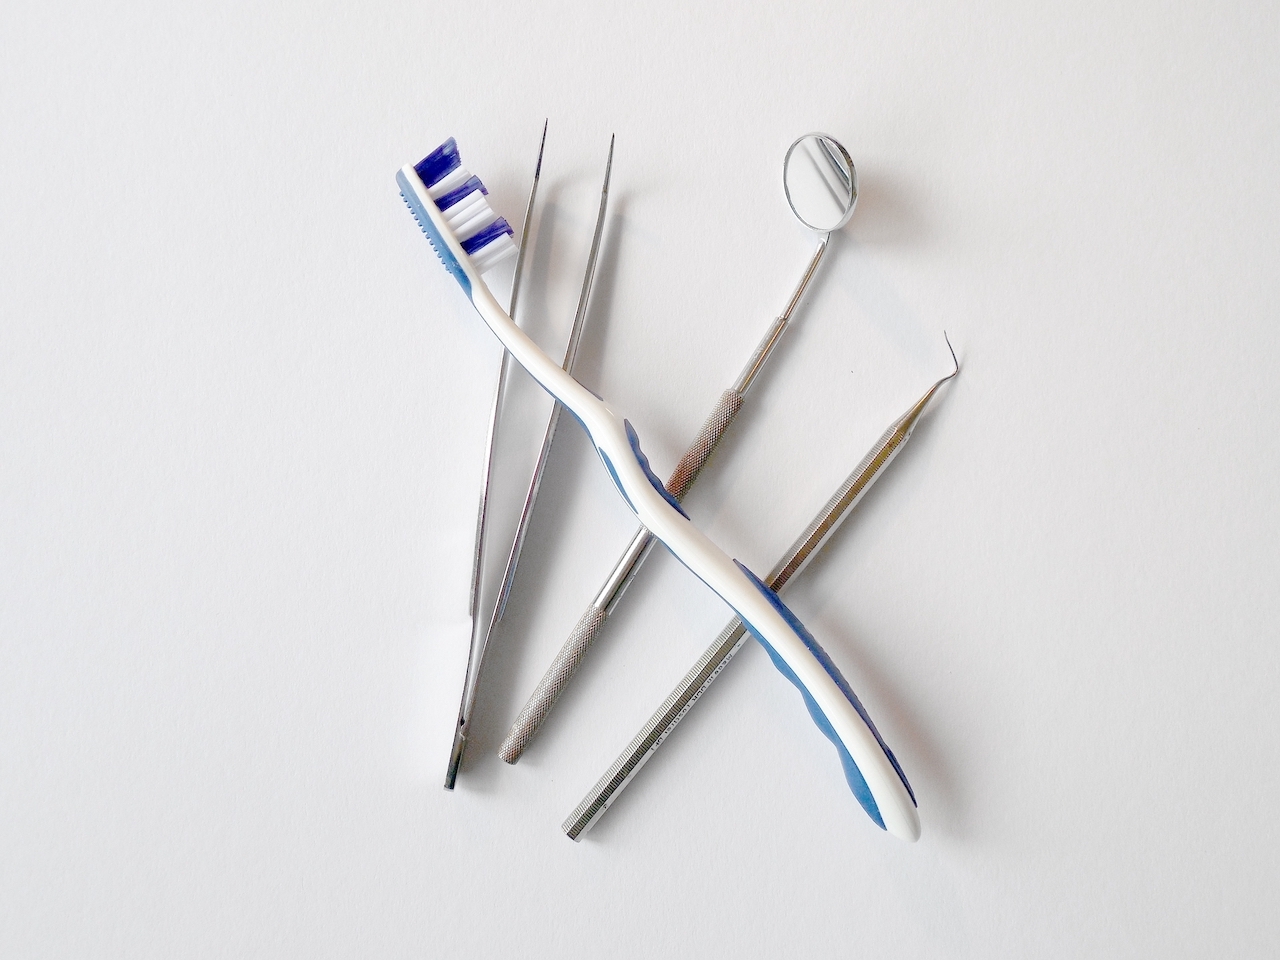 Dentistry tools used to clean teeth: Toothbrush, mirror, scaler